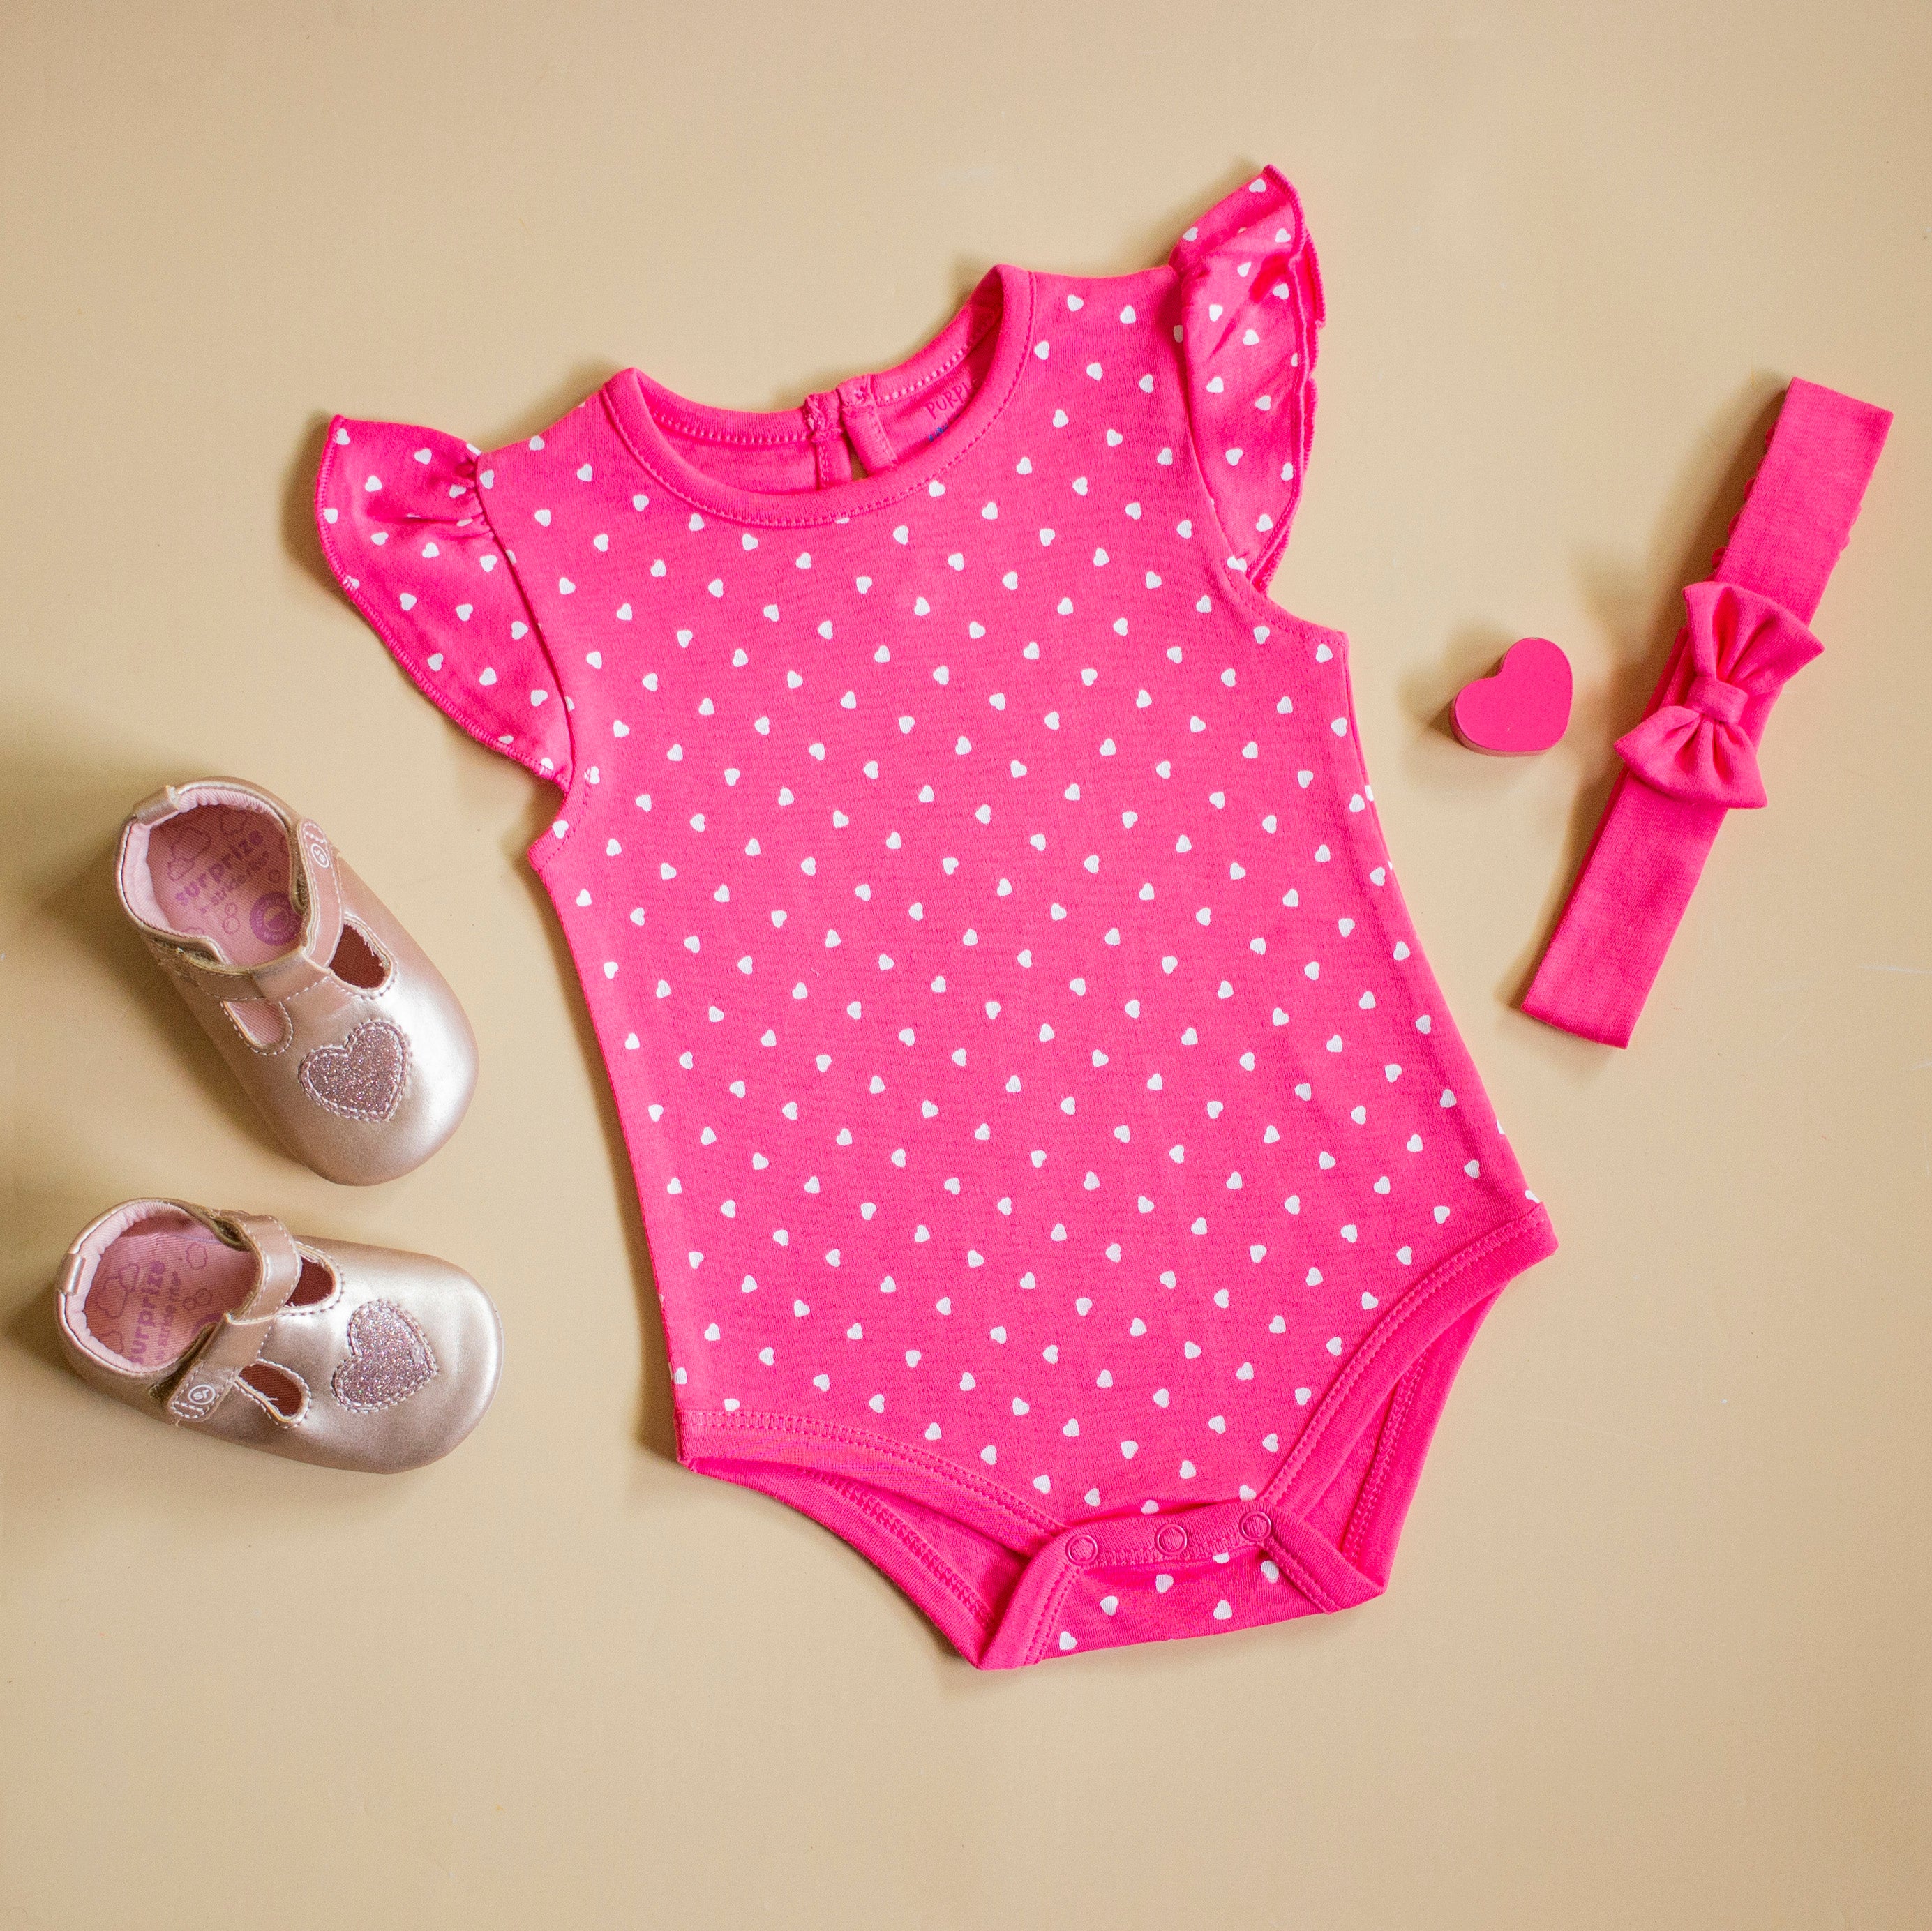 Baby Girl Onesie/Bodysuit | 3 Colour Combo Packs |100% Cotton